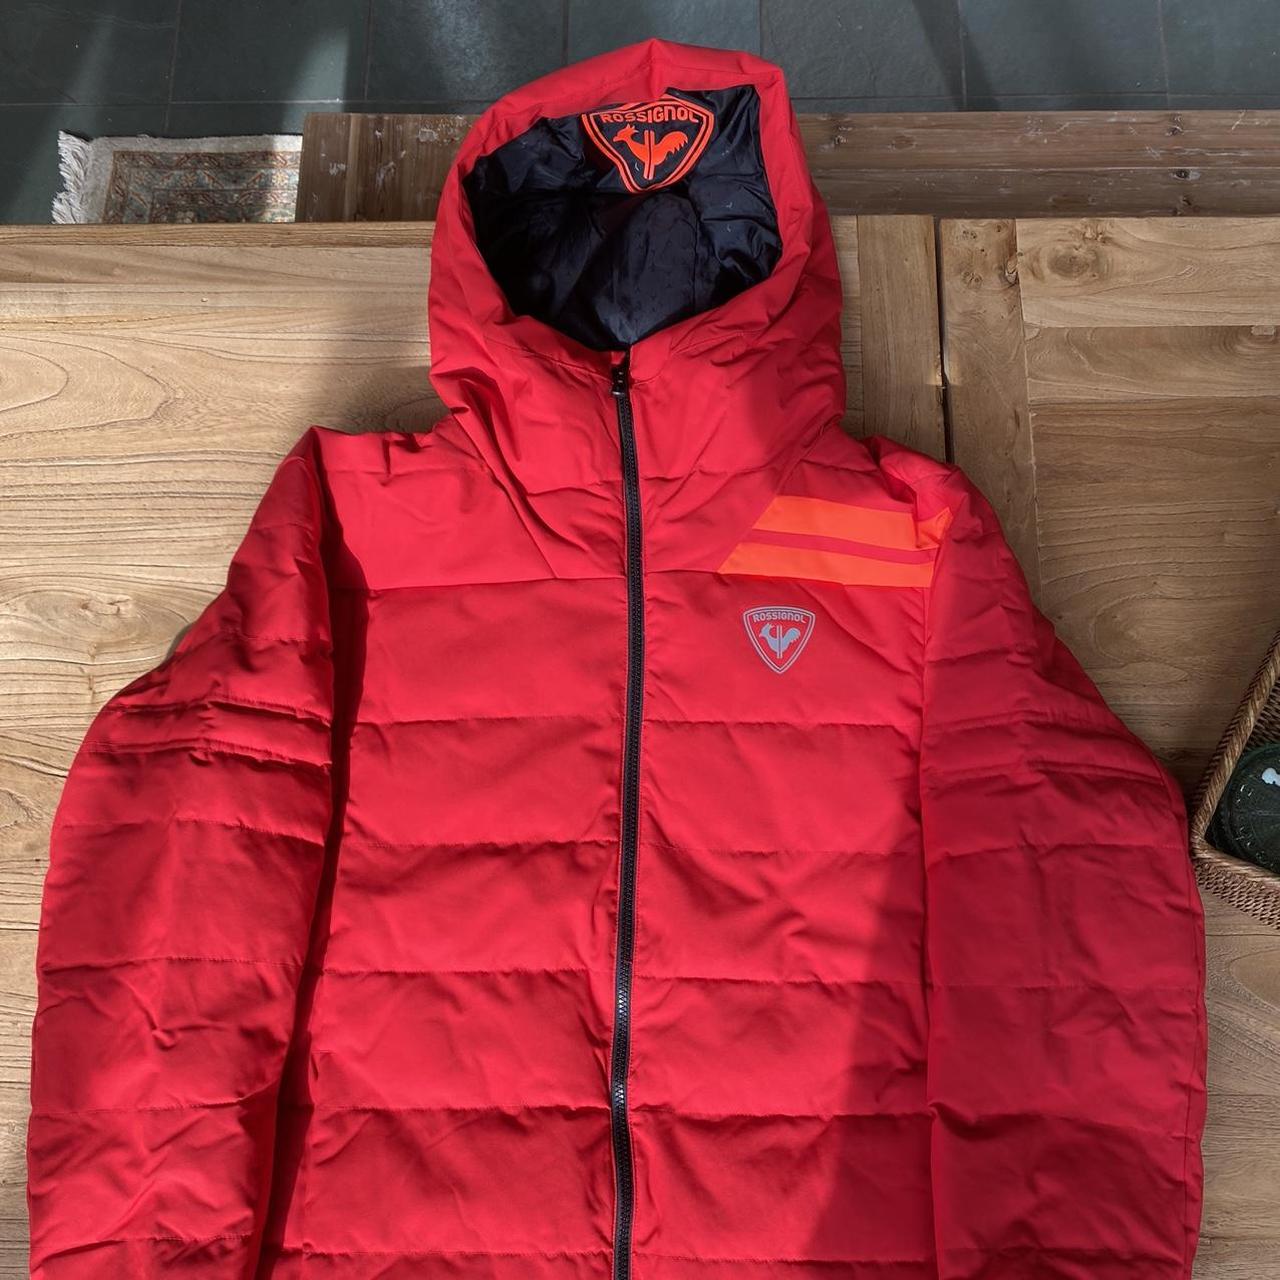 Rosignol rapids Ski jacket. Brand new with tags.... - Depop